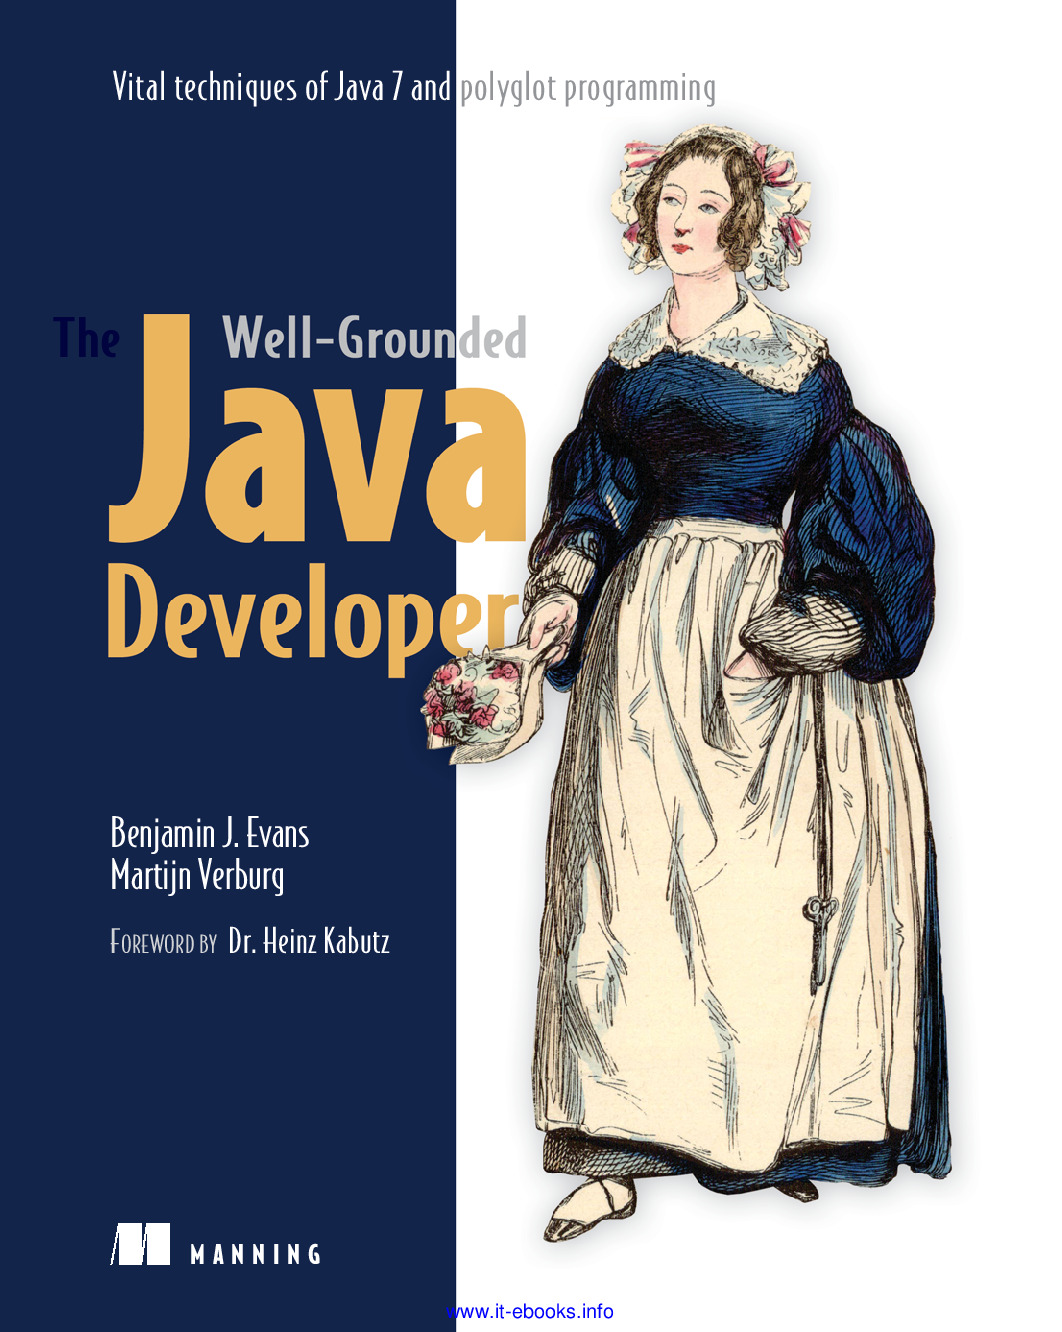 [JAVA][The Well-Grounded Java Developer]